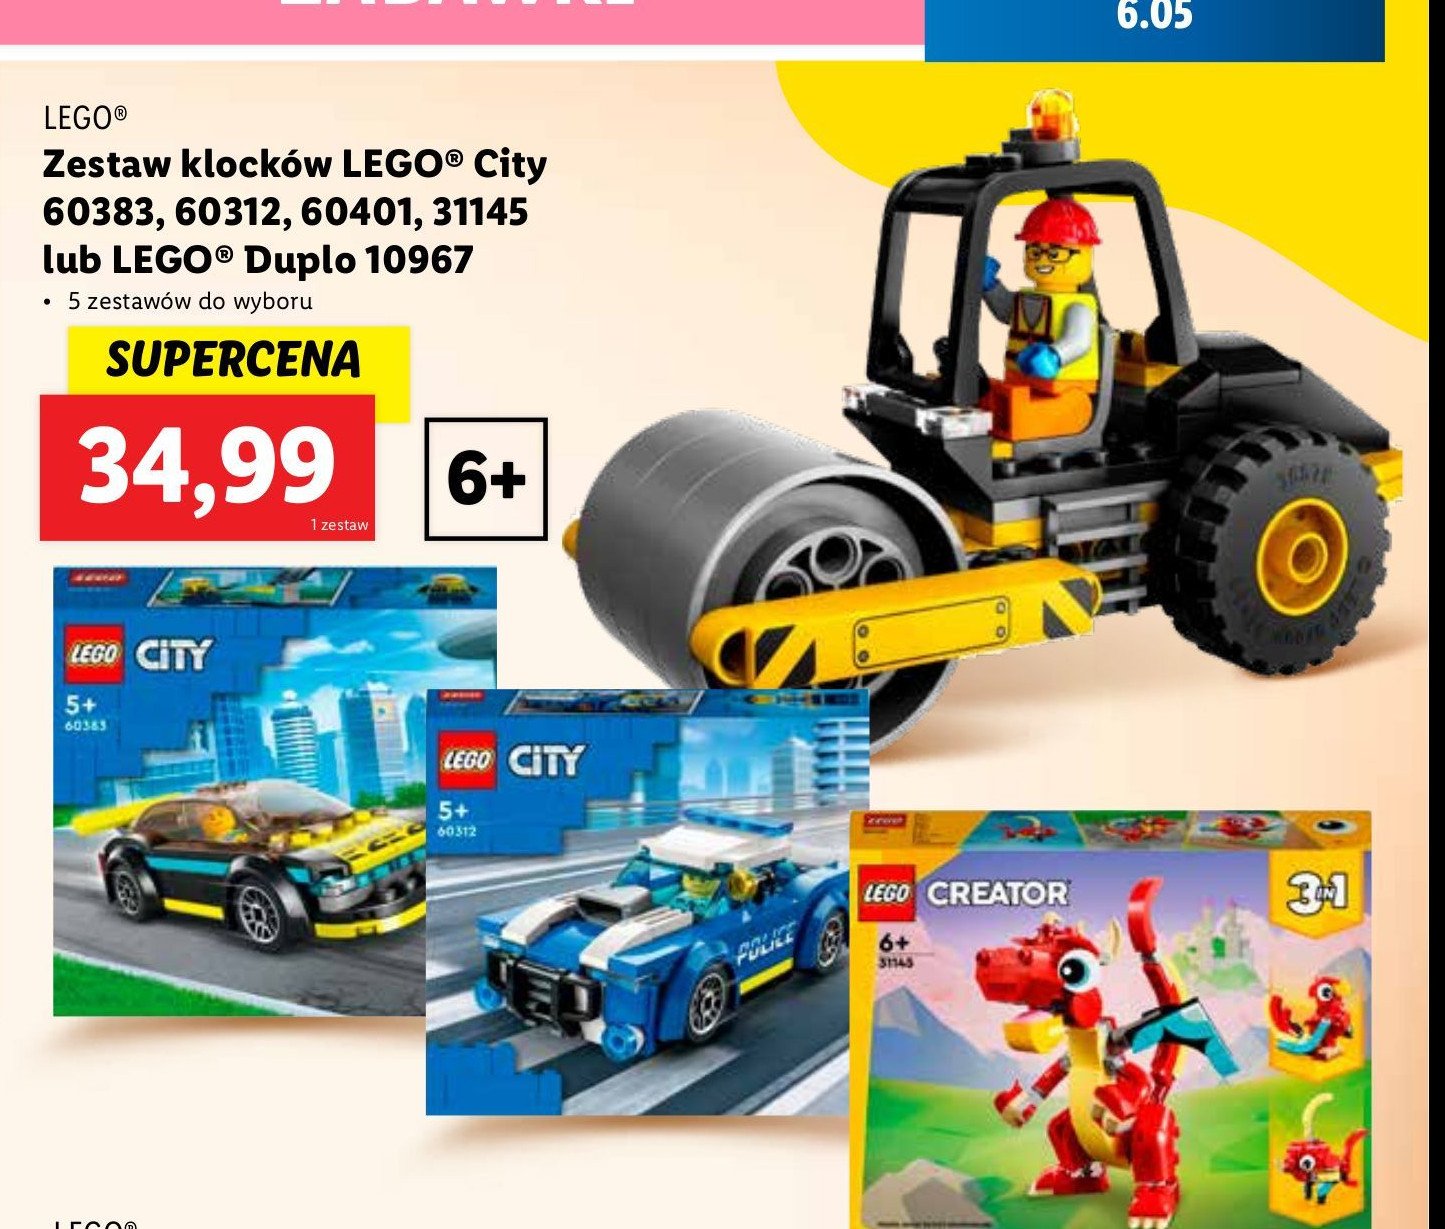 Klocki 60401 Lego city promocja